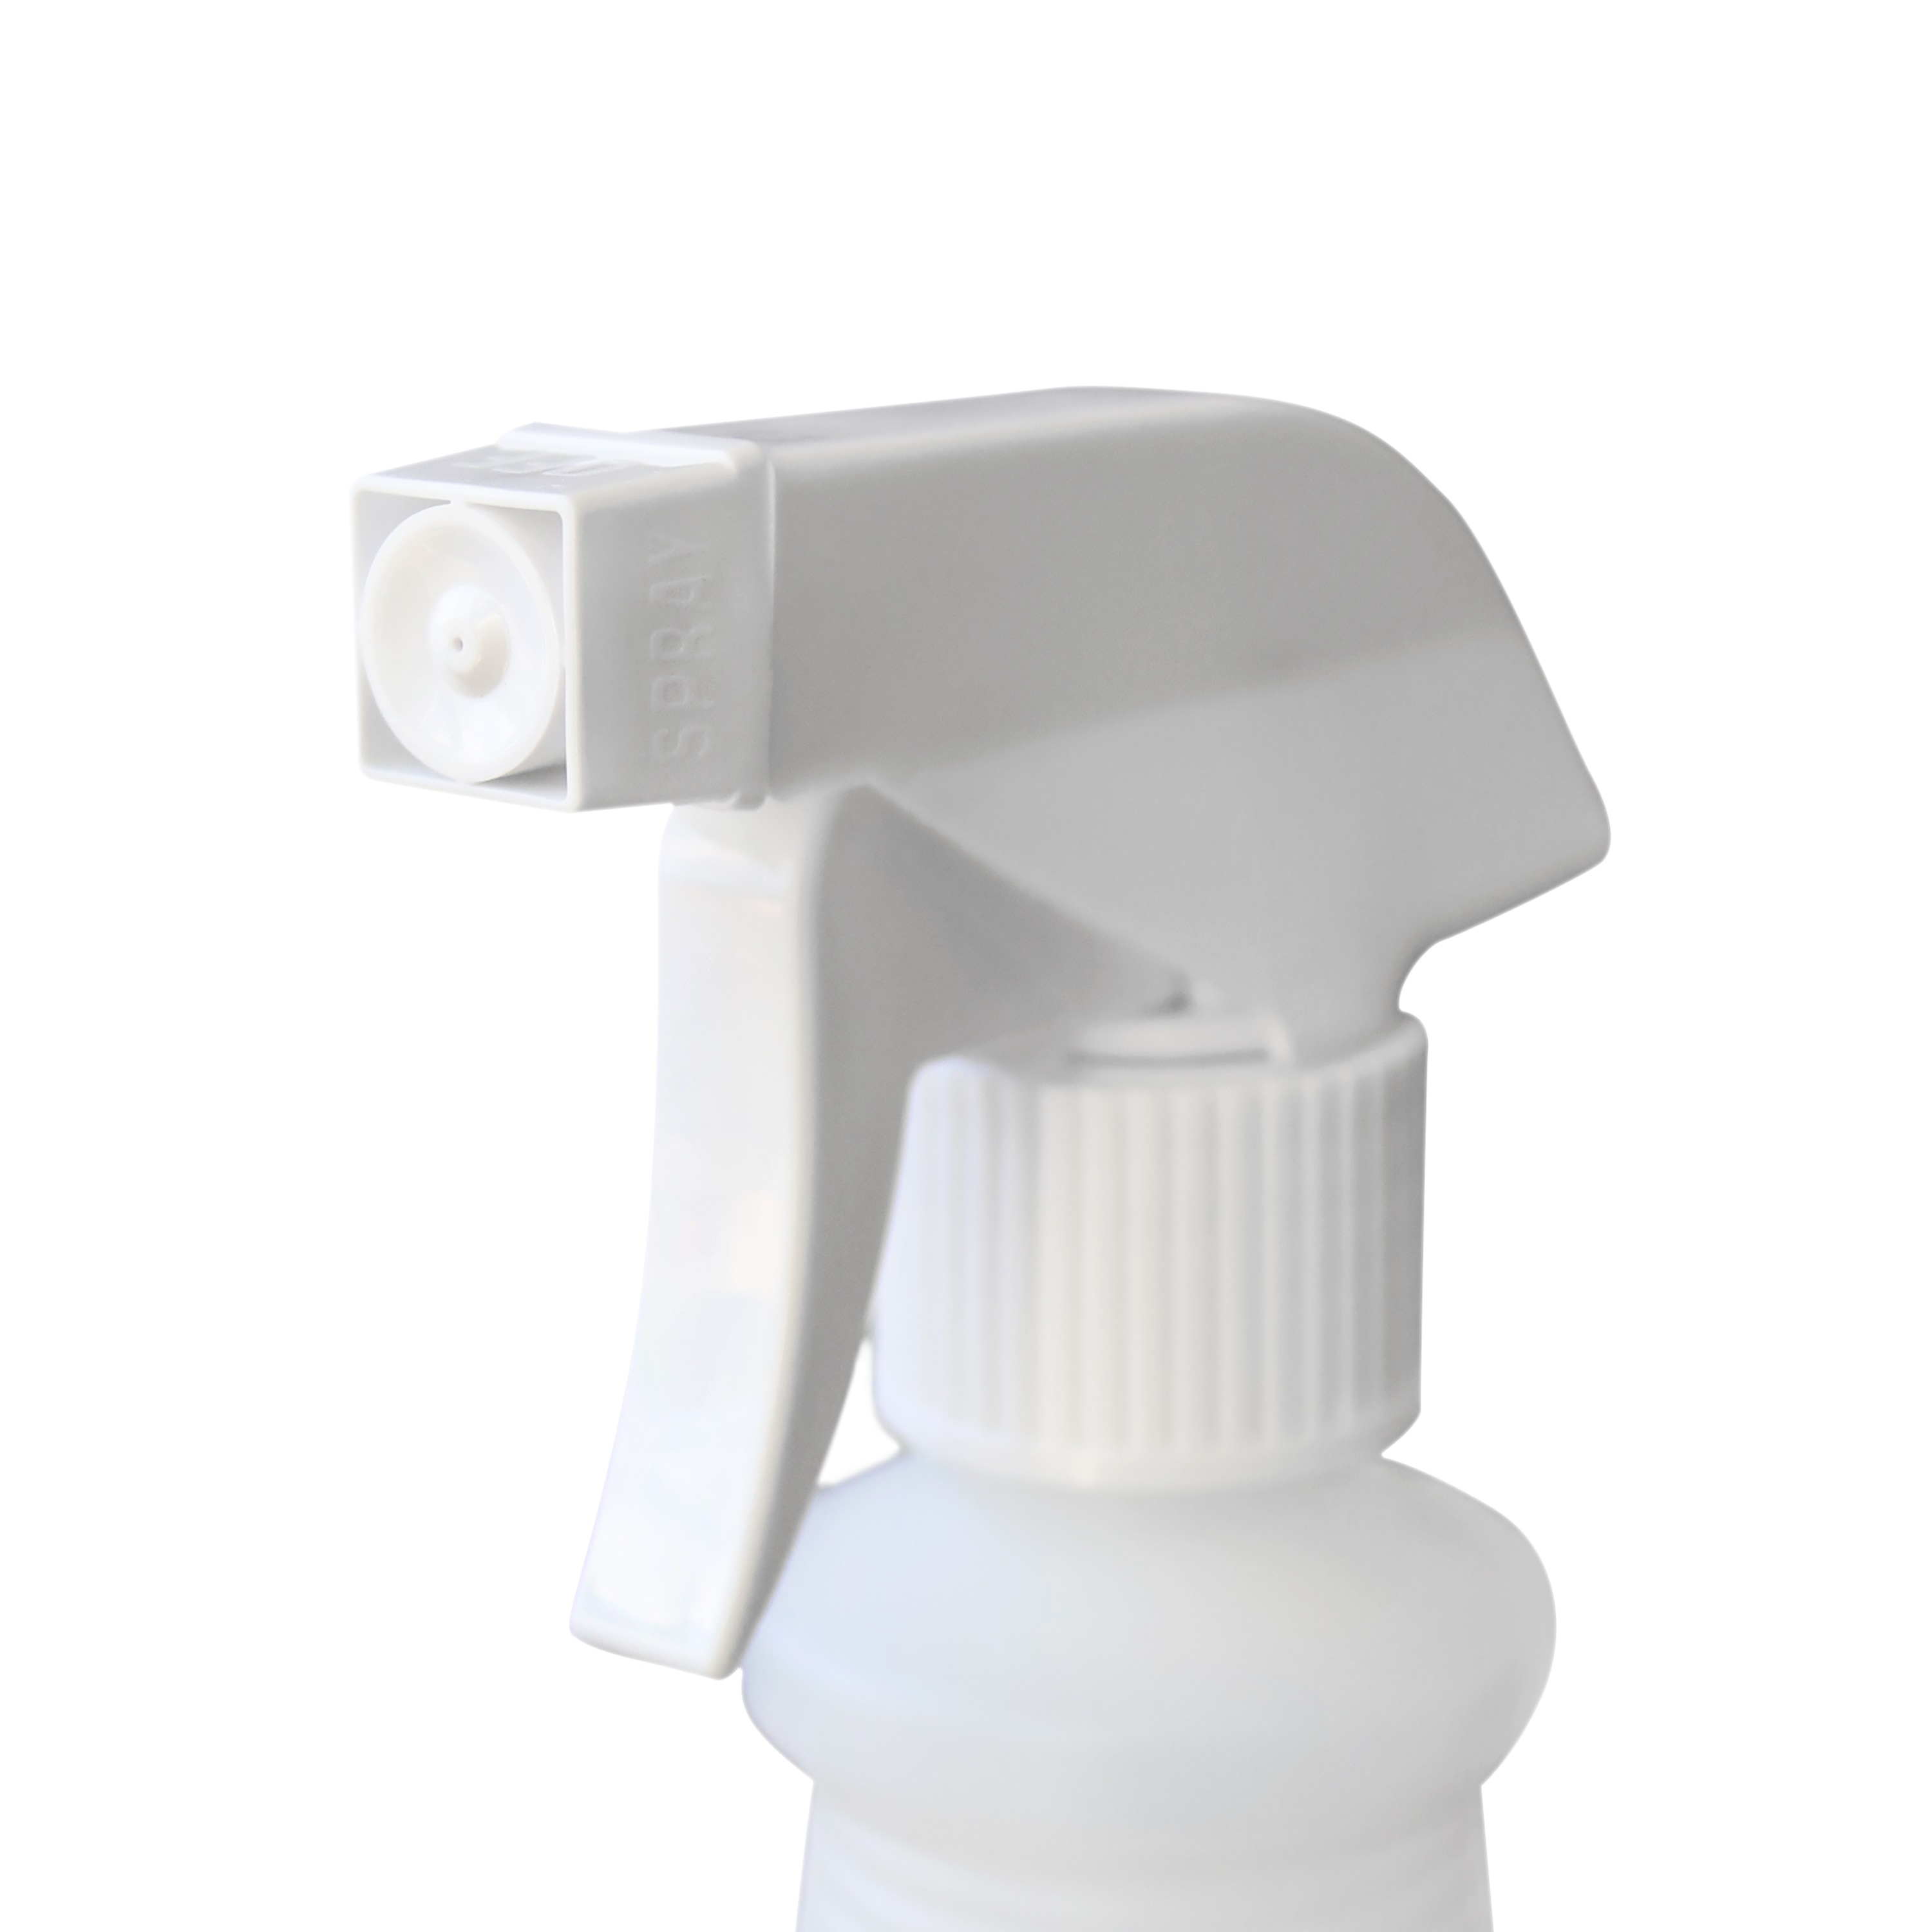 Captain's Choice Chemical Resistant Spray Bottle & Trigger - 32 oz